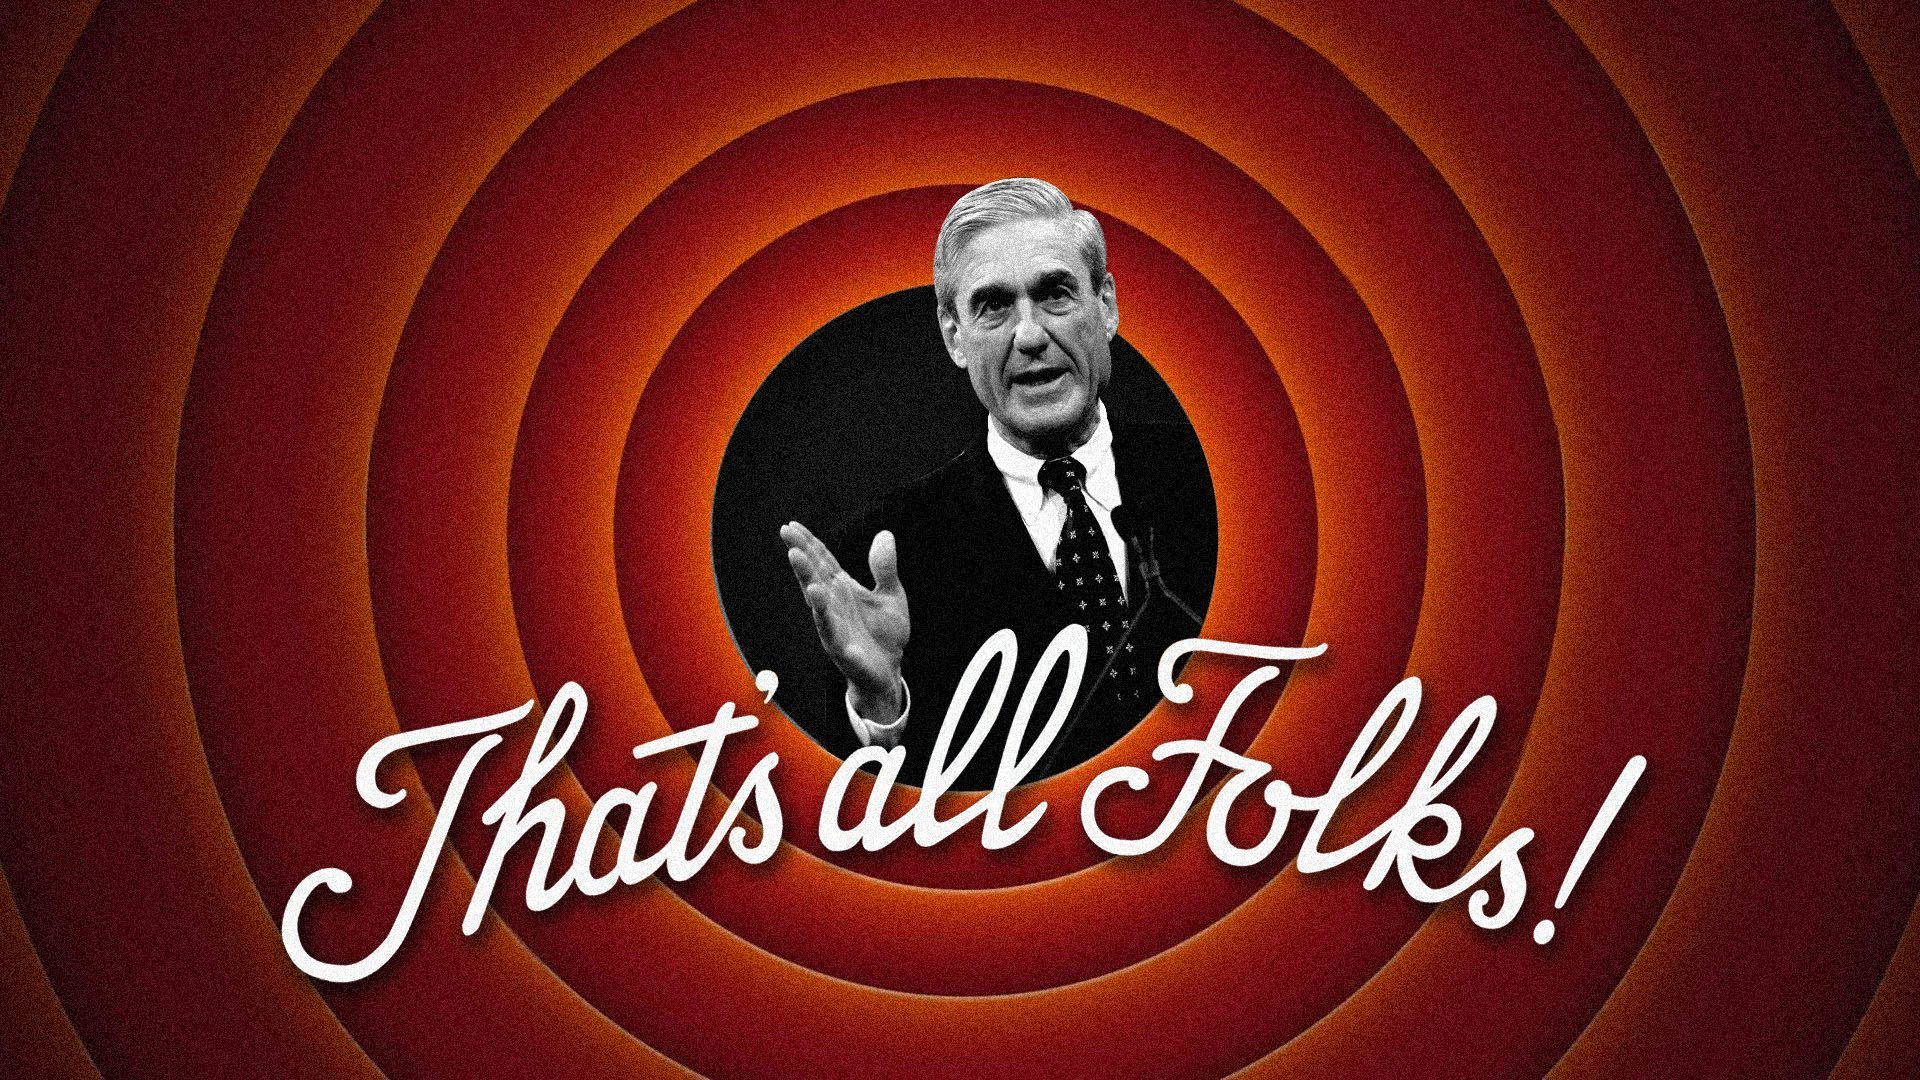 Mueller illustration saying that's all folks